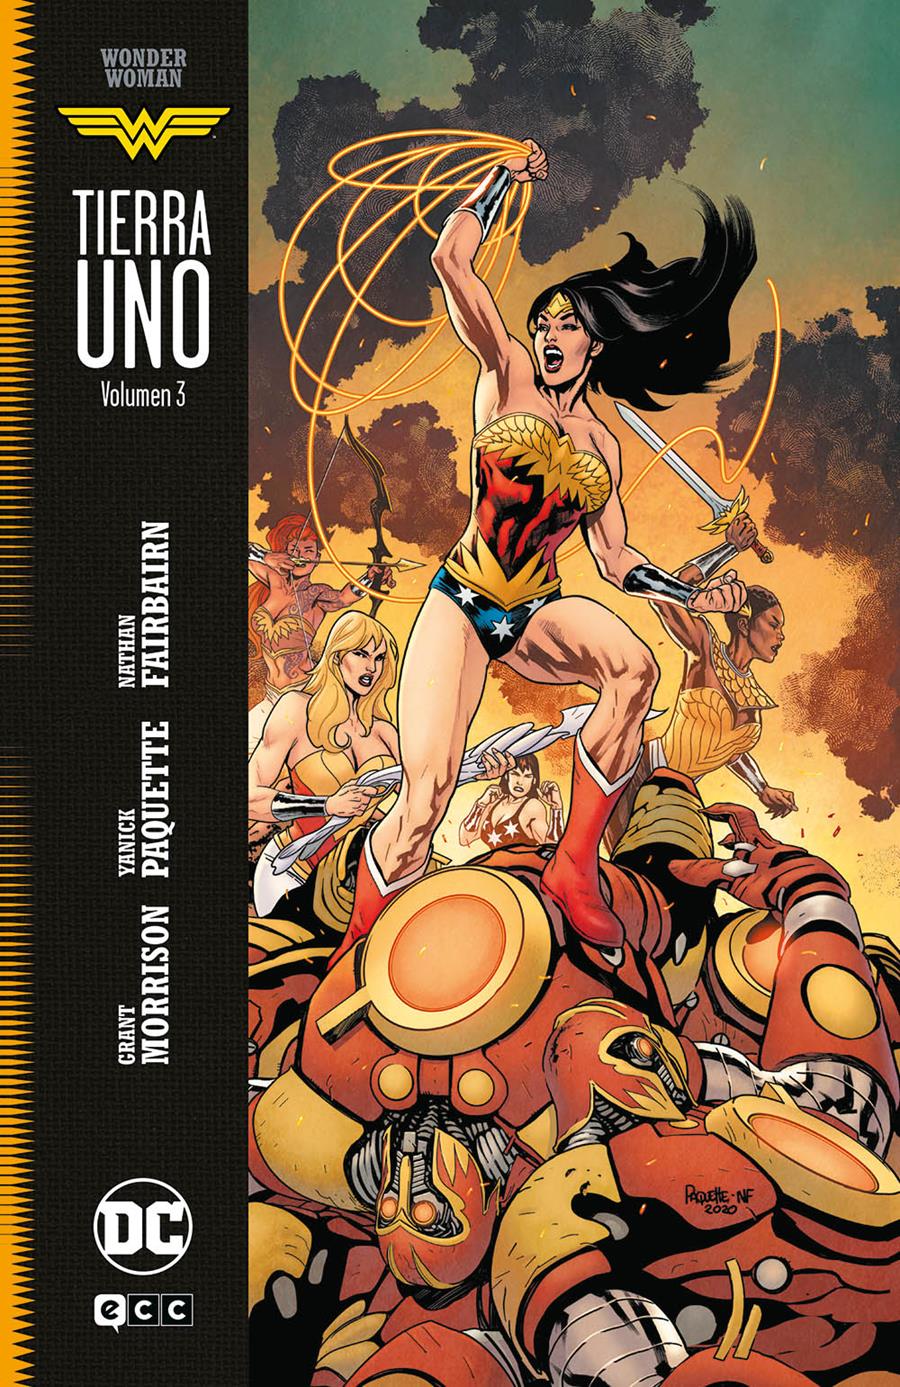 Wonder Woman: Tierra uno vol. 03 | N0721-ECC20 | Grant Morrison / Nathan Fairbairn / Yanick Paquette | Terra de Còmic - Tu tienda de cómics online especializada en cómics, manga y merchandising